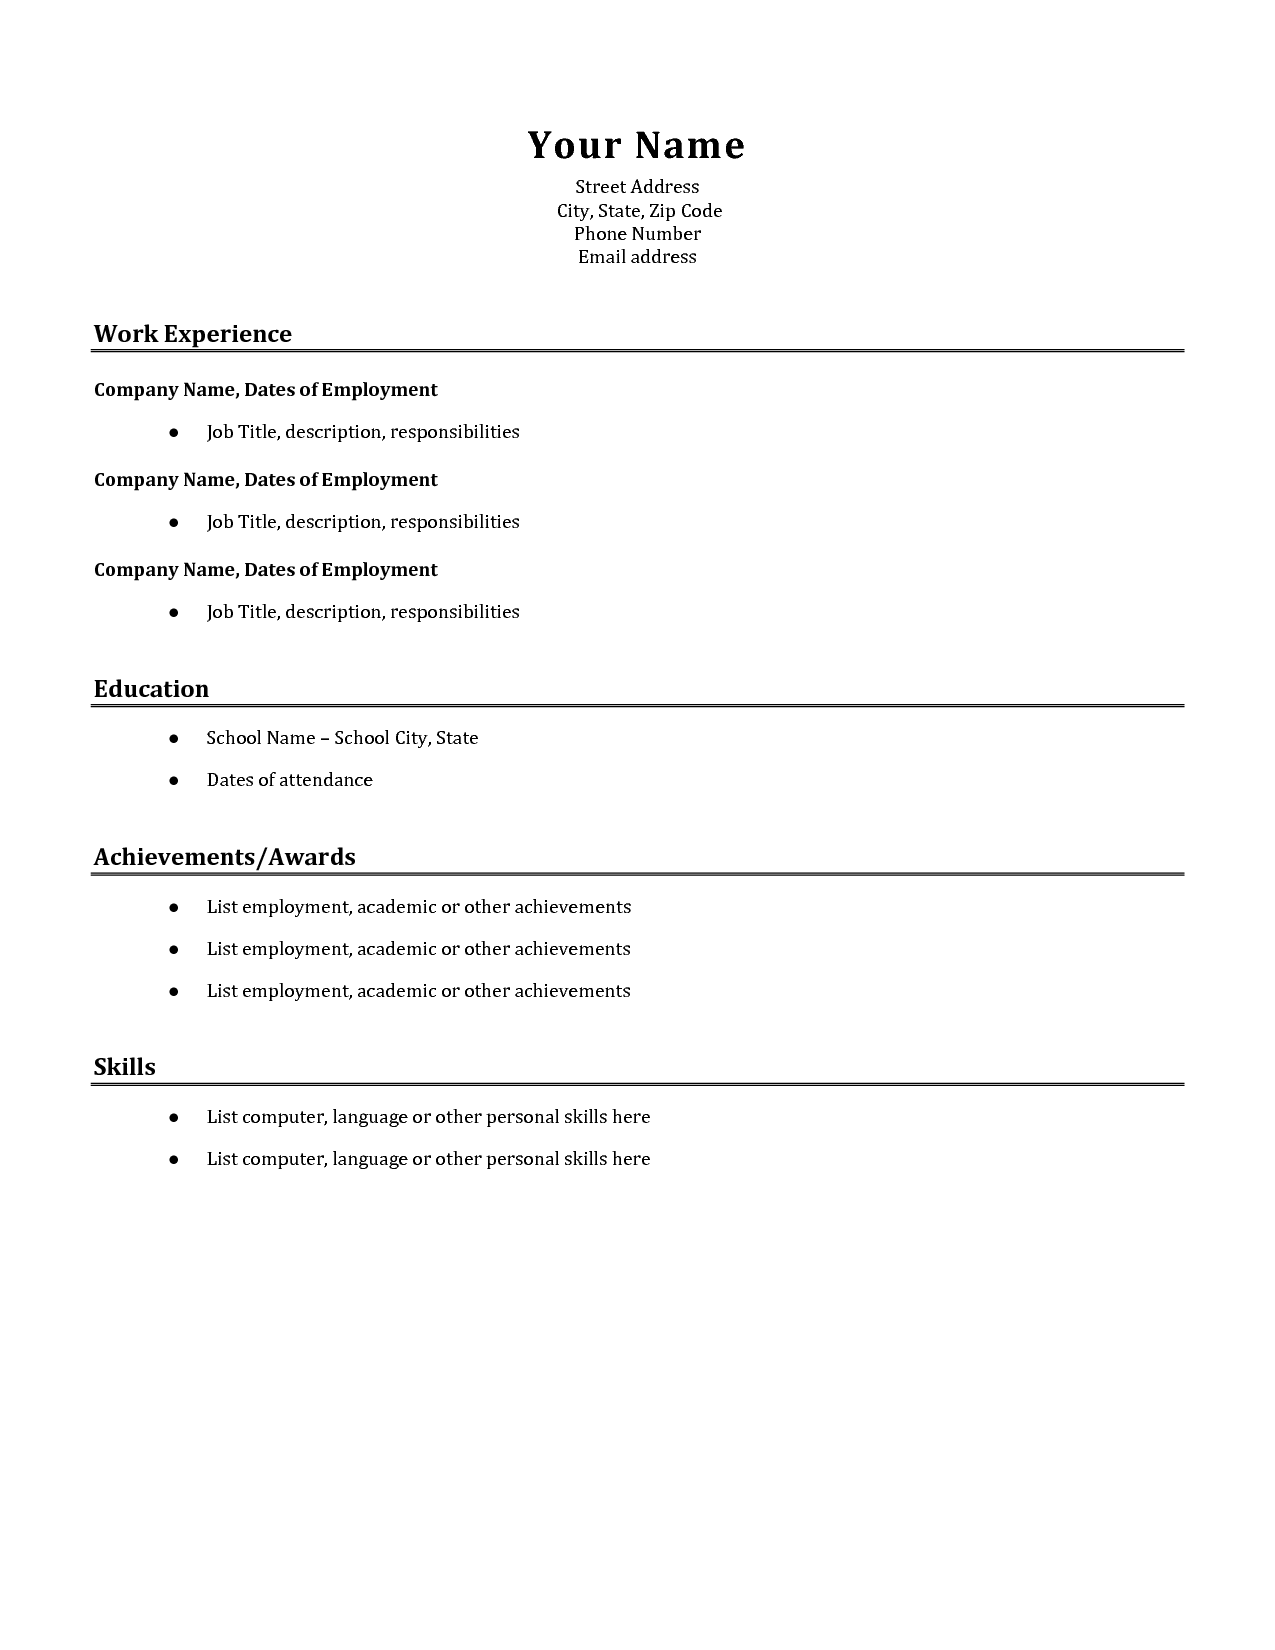 Resume Format Basic 